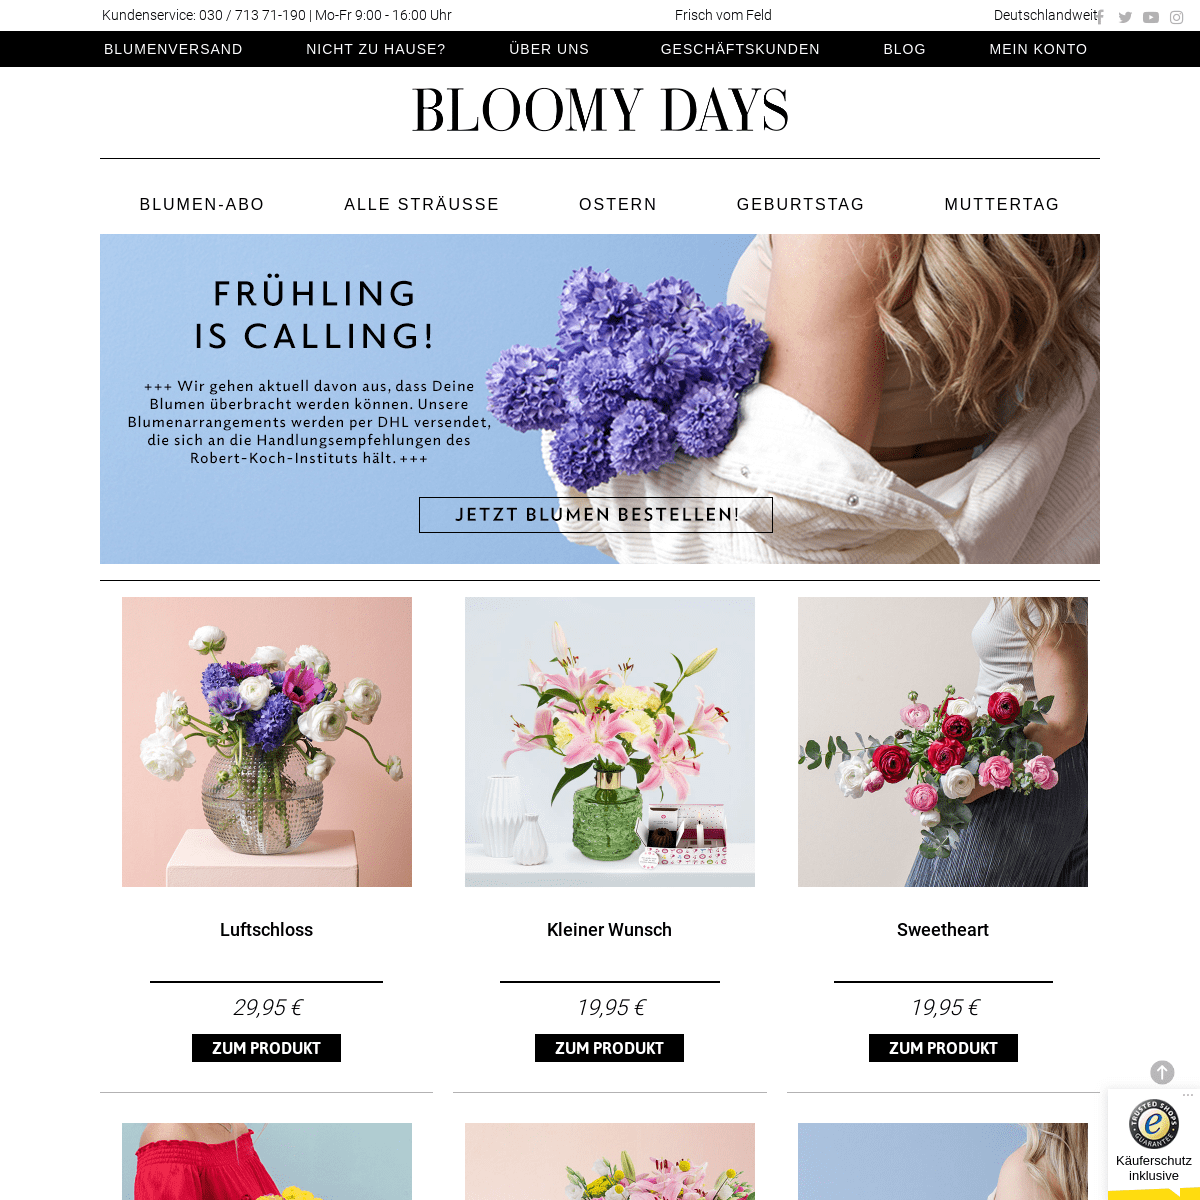 A complete backup of bloomydays.com